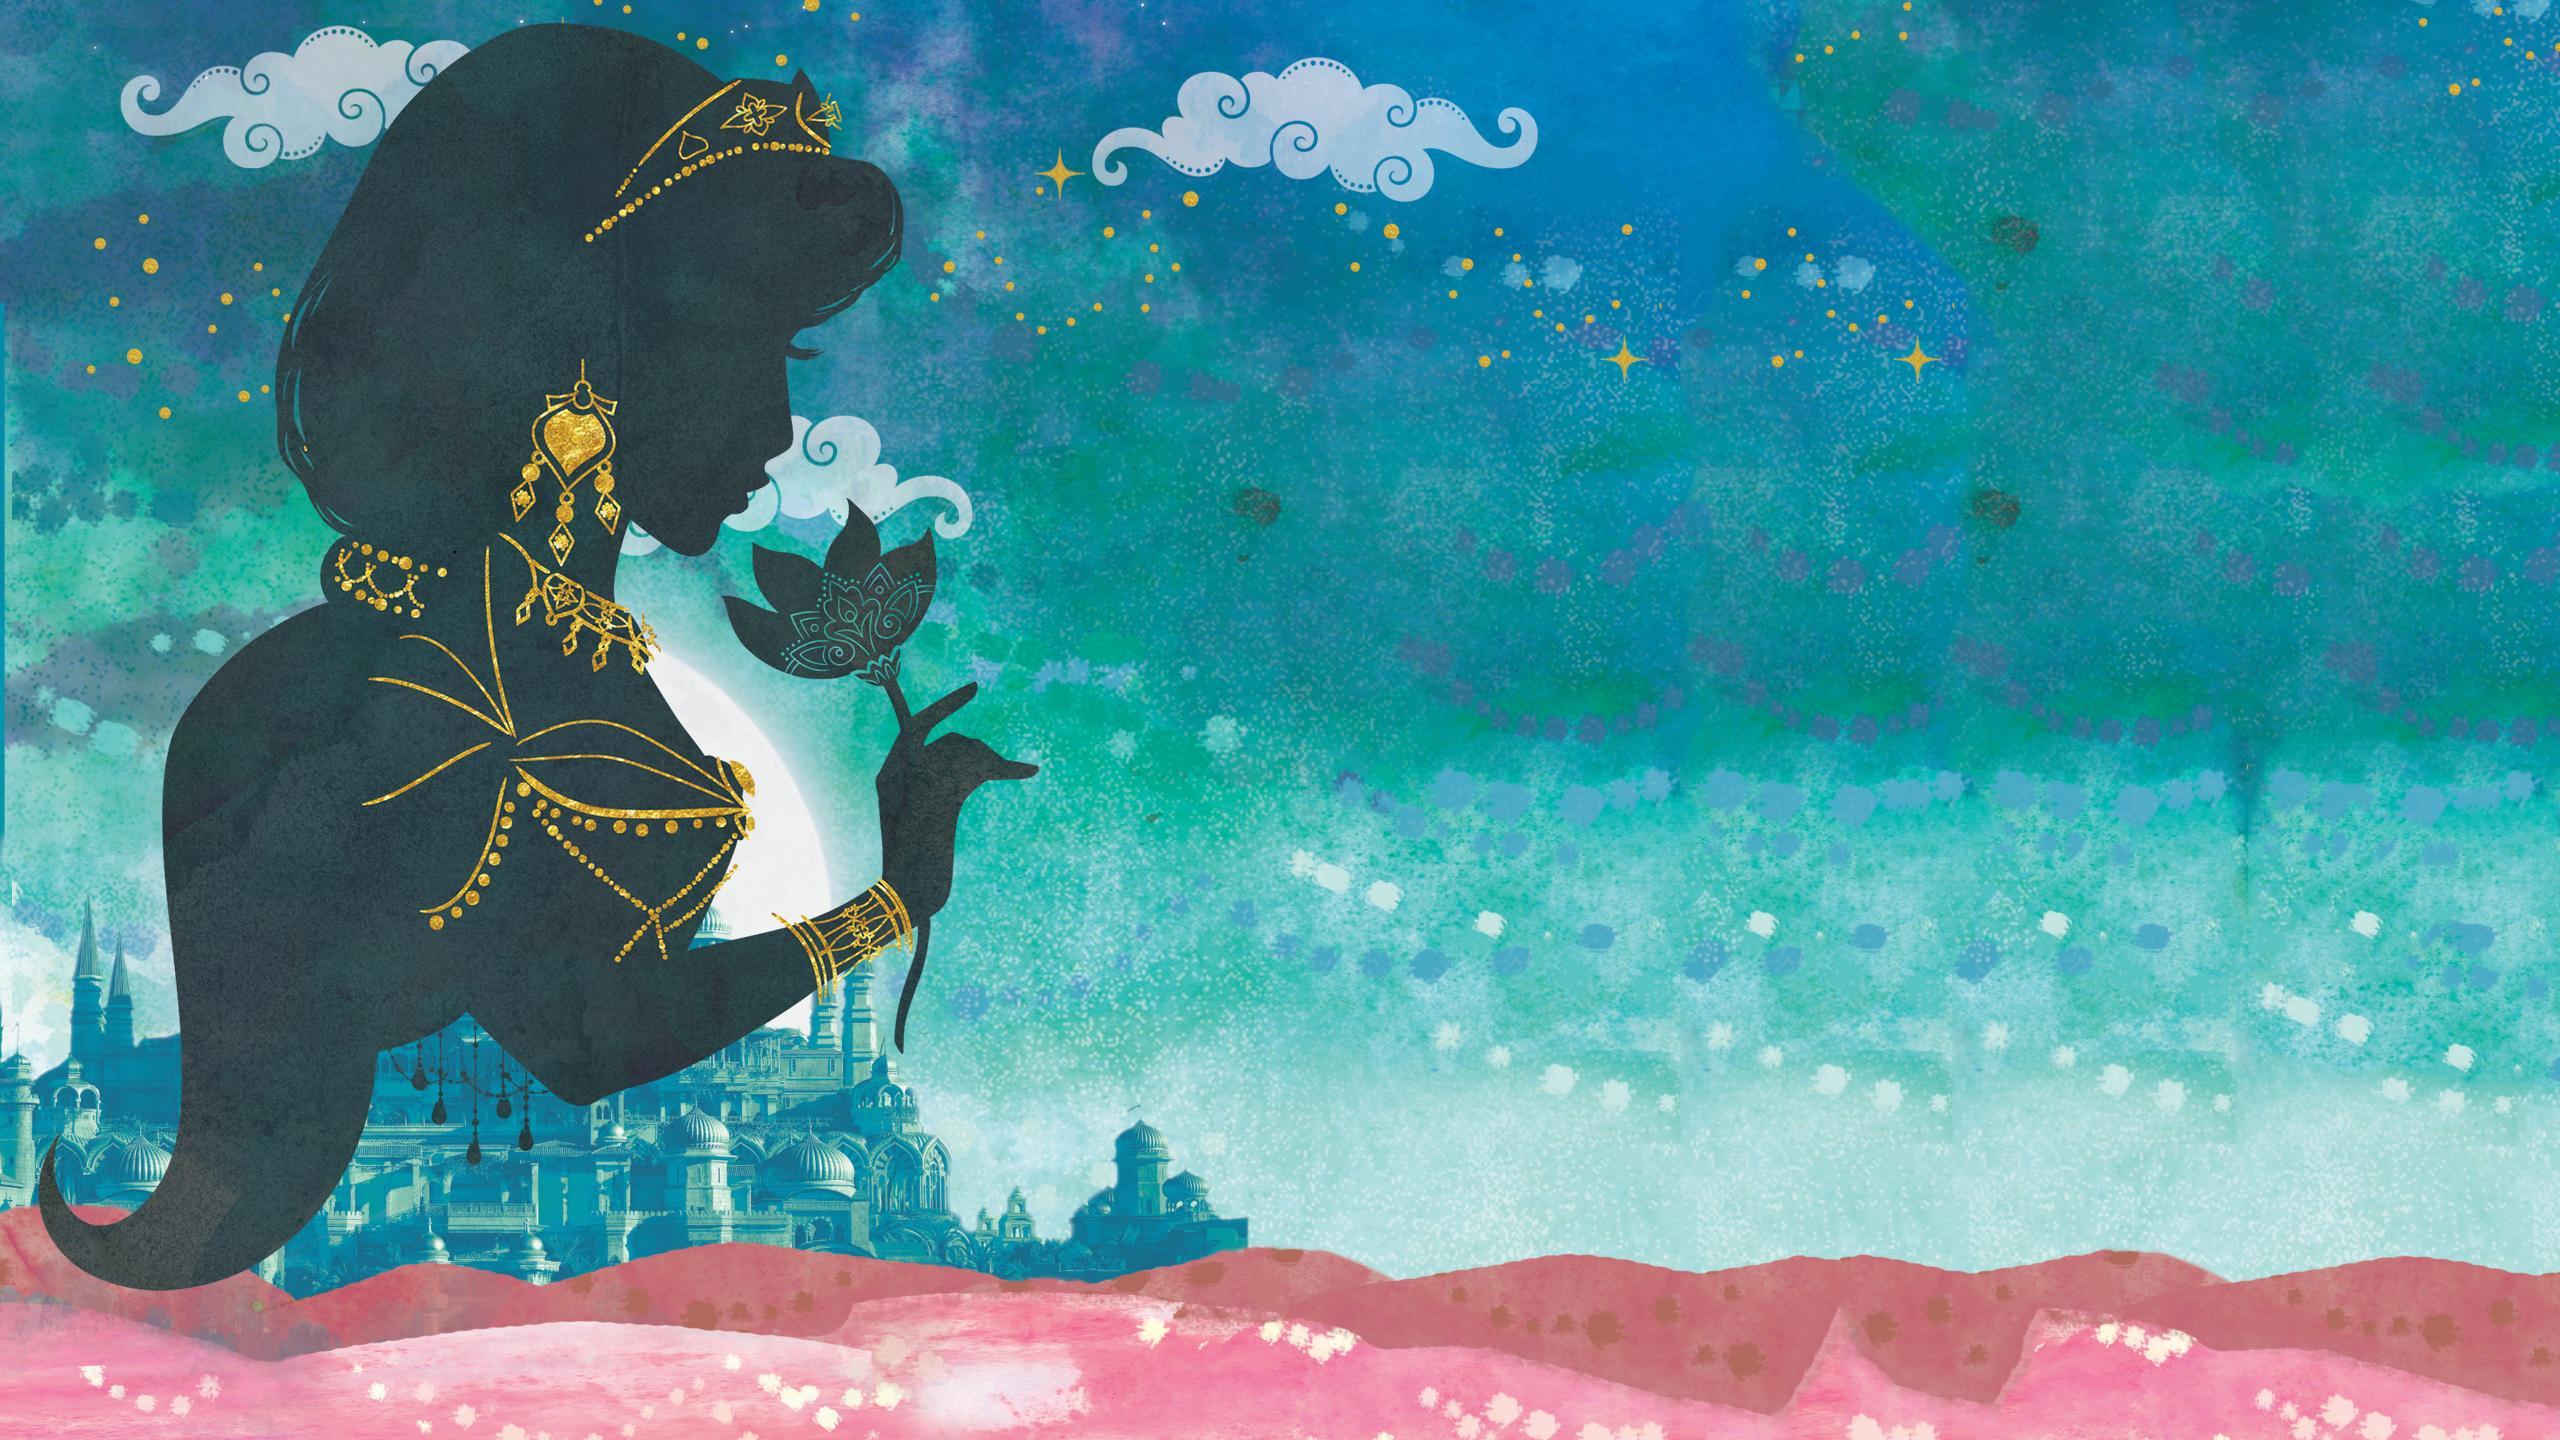 Aladdin 2019 Desktop Wallpaper